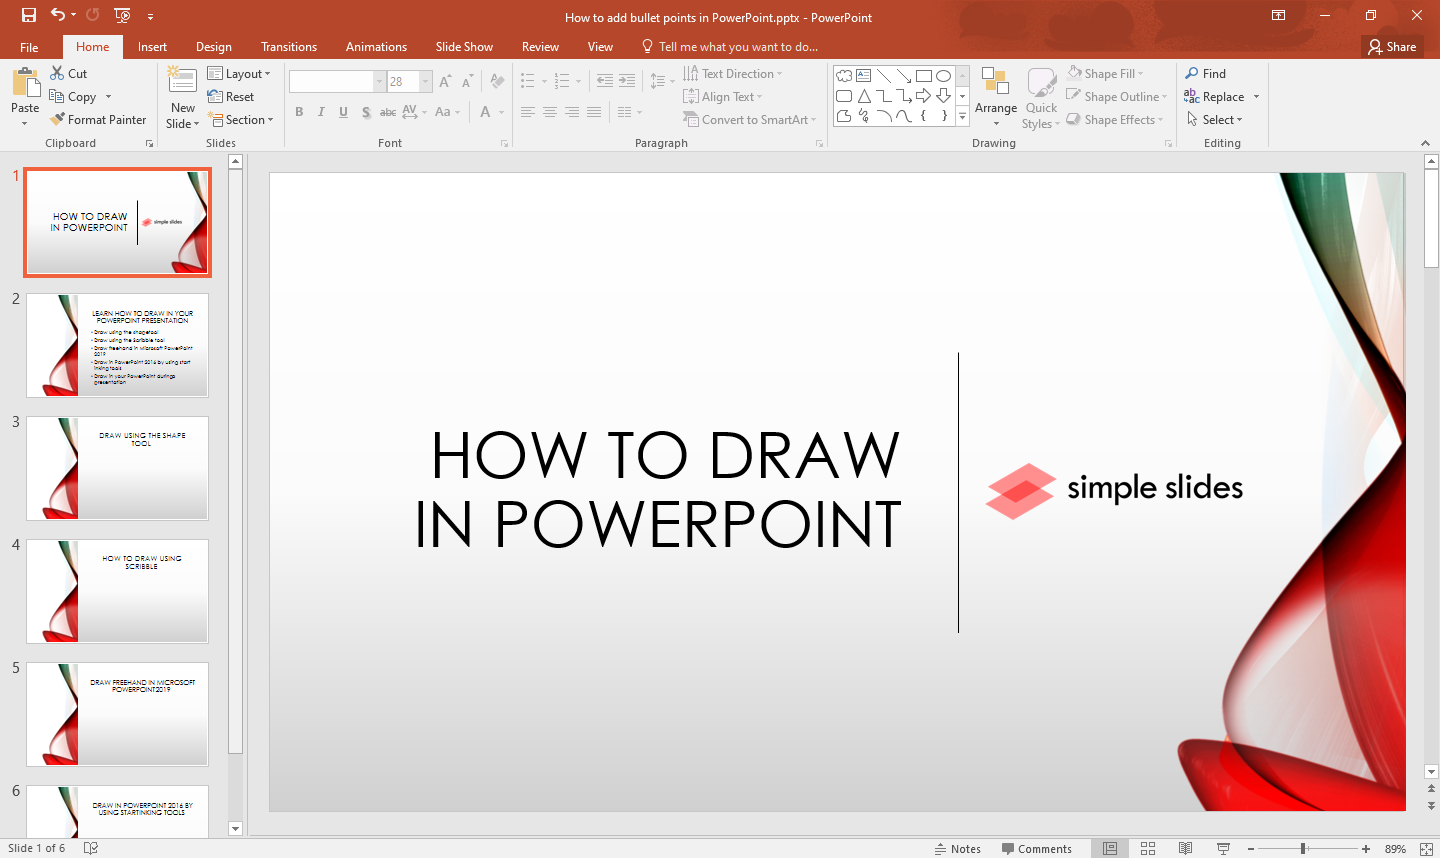 Open your PowerPoint